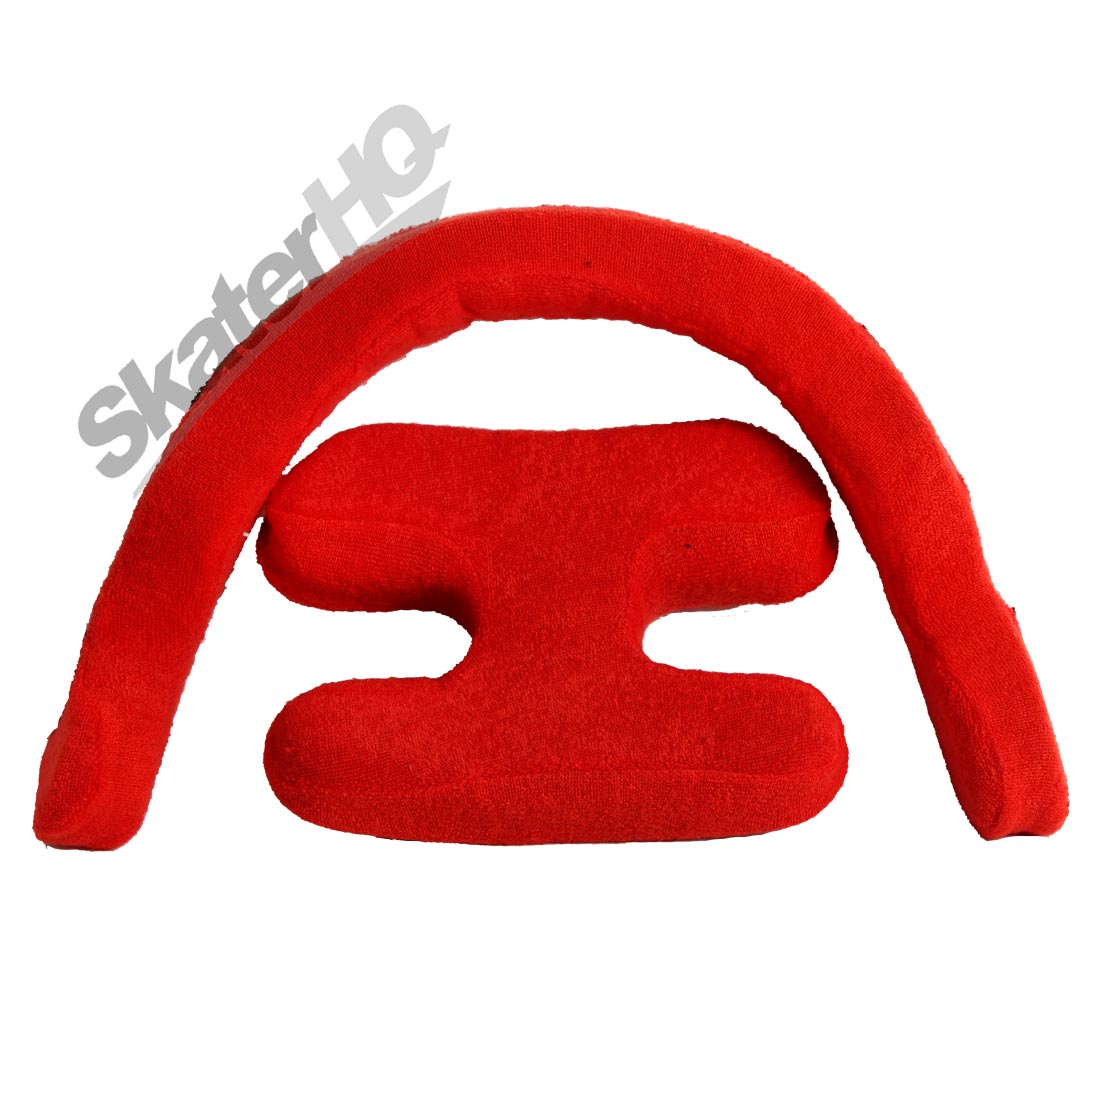 Triple 8 Sweatsaver Liner - Red - L Helmet liners